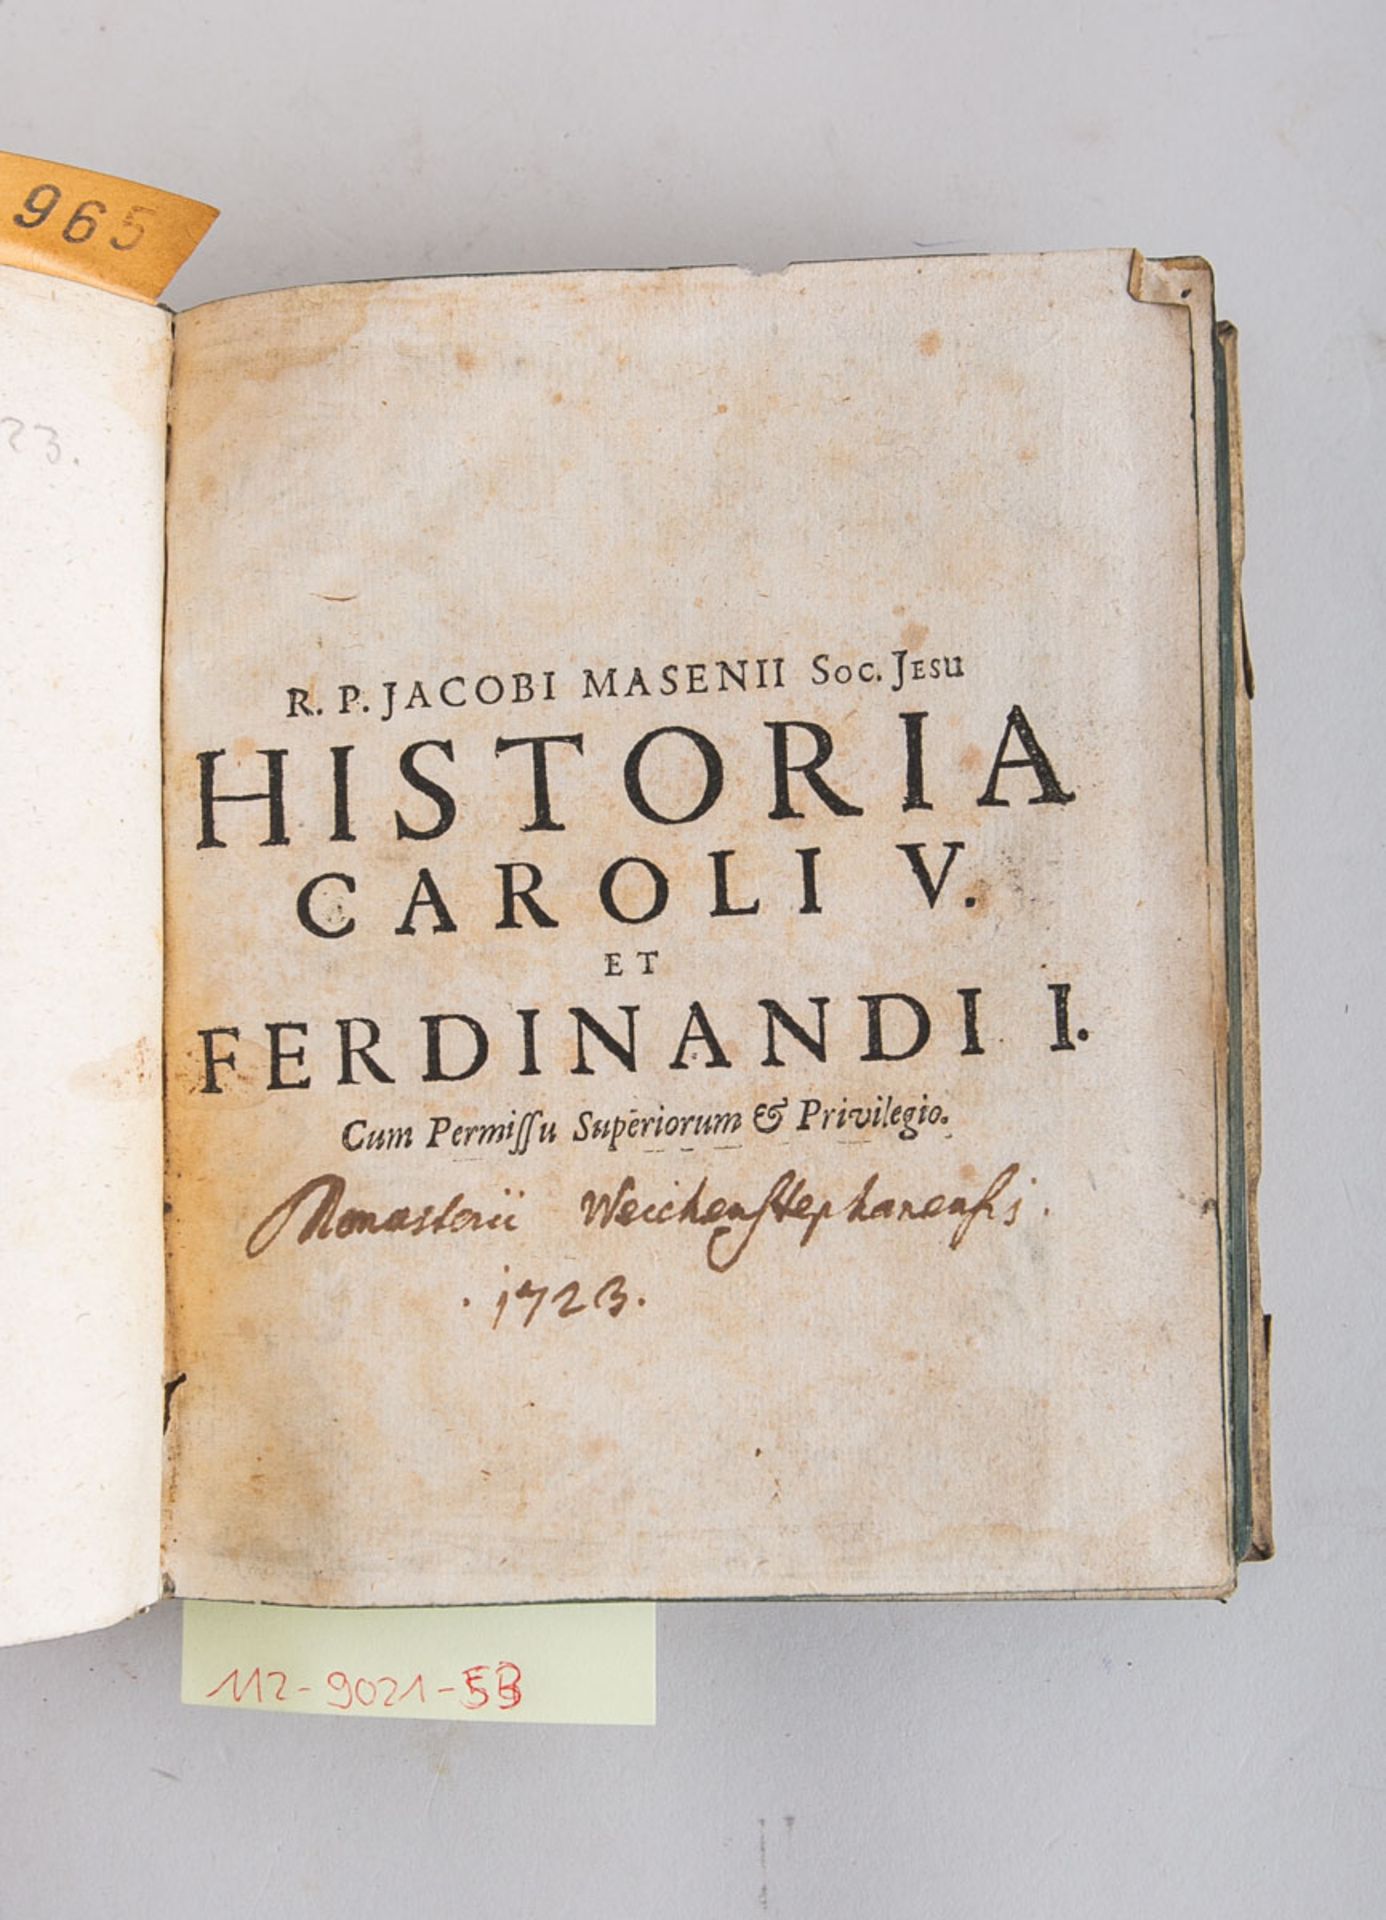 R.P. Jocubii Masen II, Soc. Jesu. Historia Caroli V. et. Ferdinandi 1. 1723 - Image 2 of 2